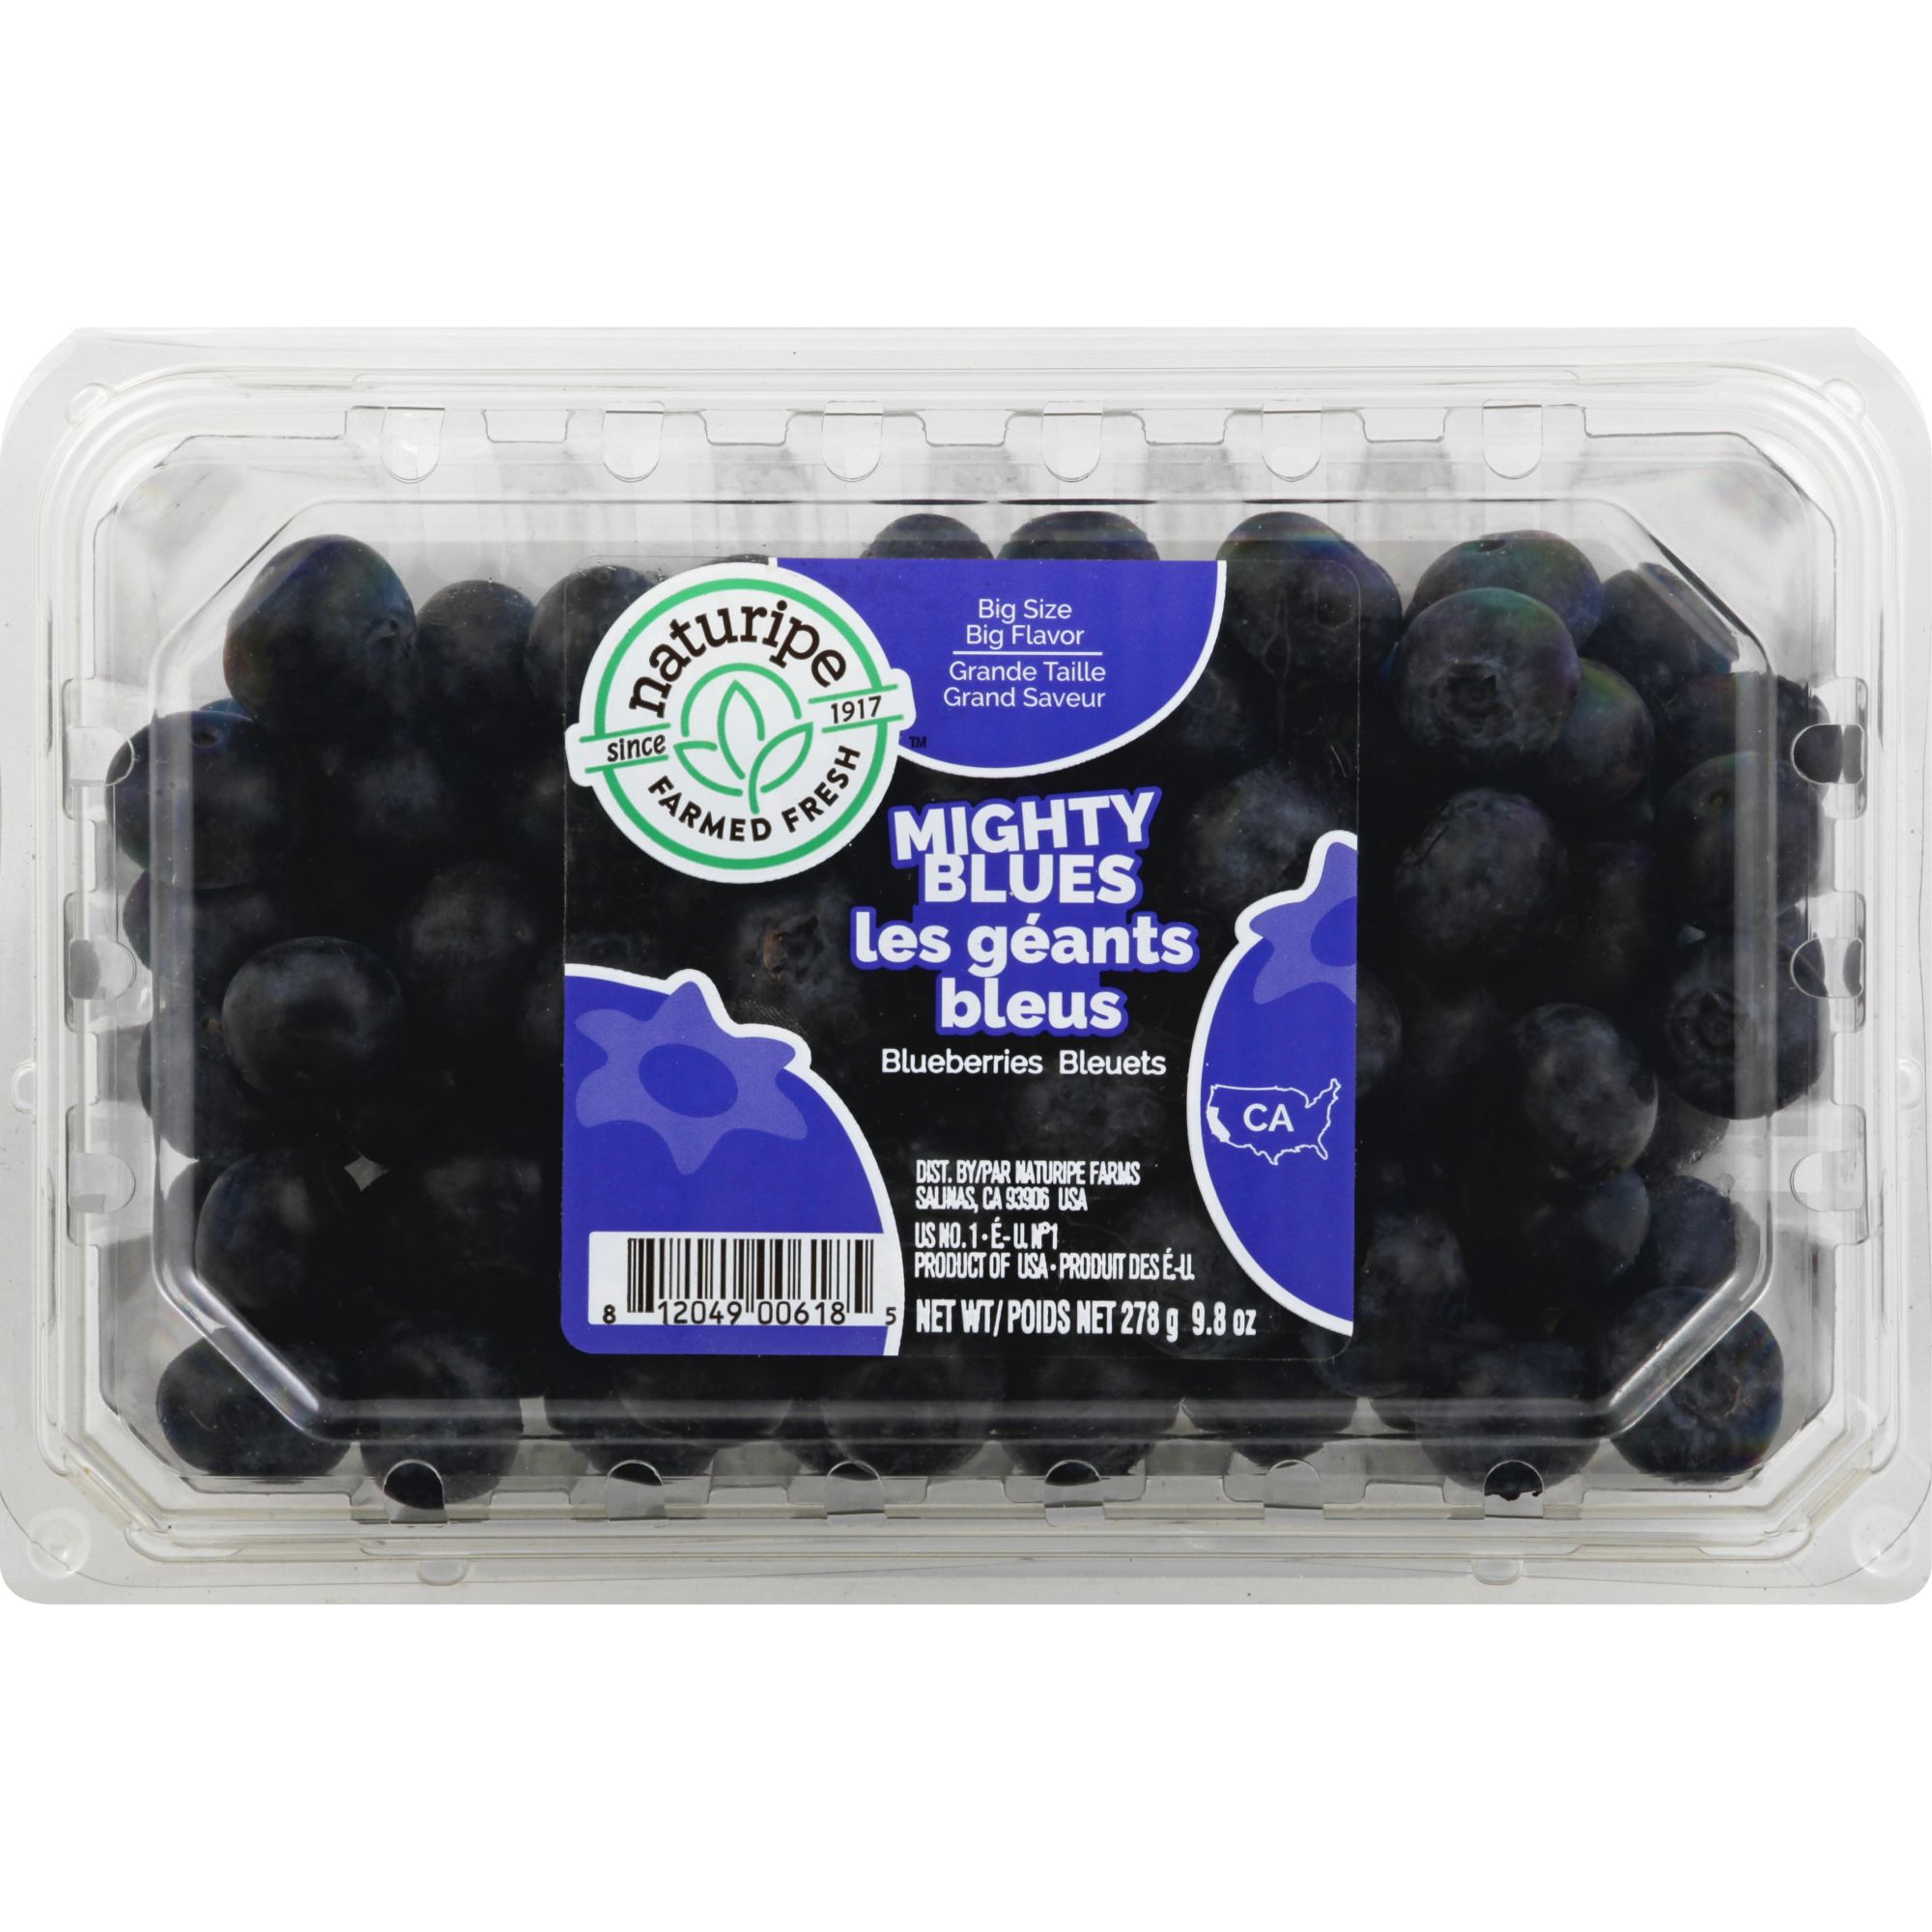 Get Jumbo Blueberries Delivered